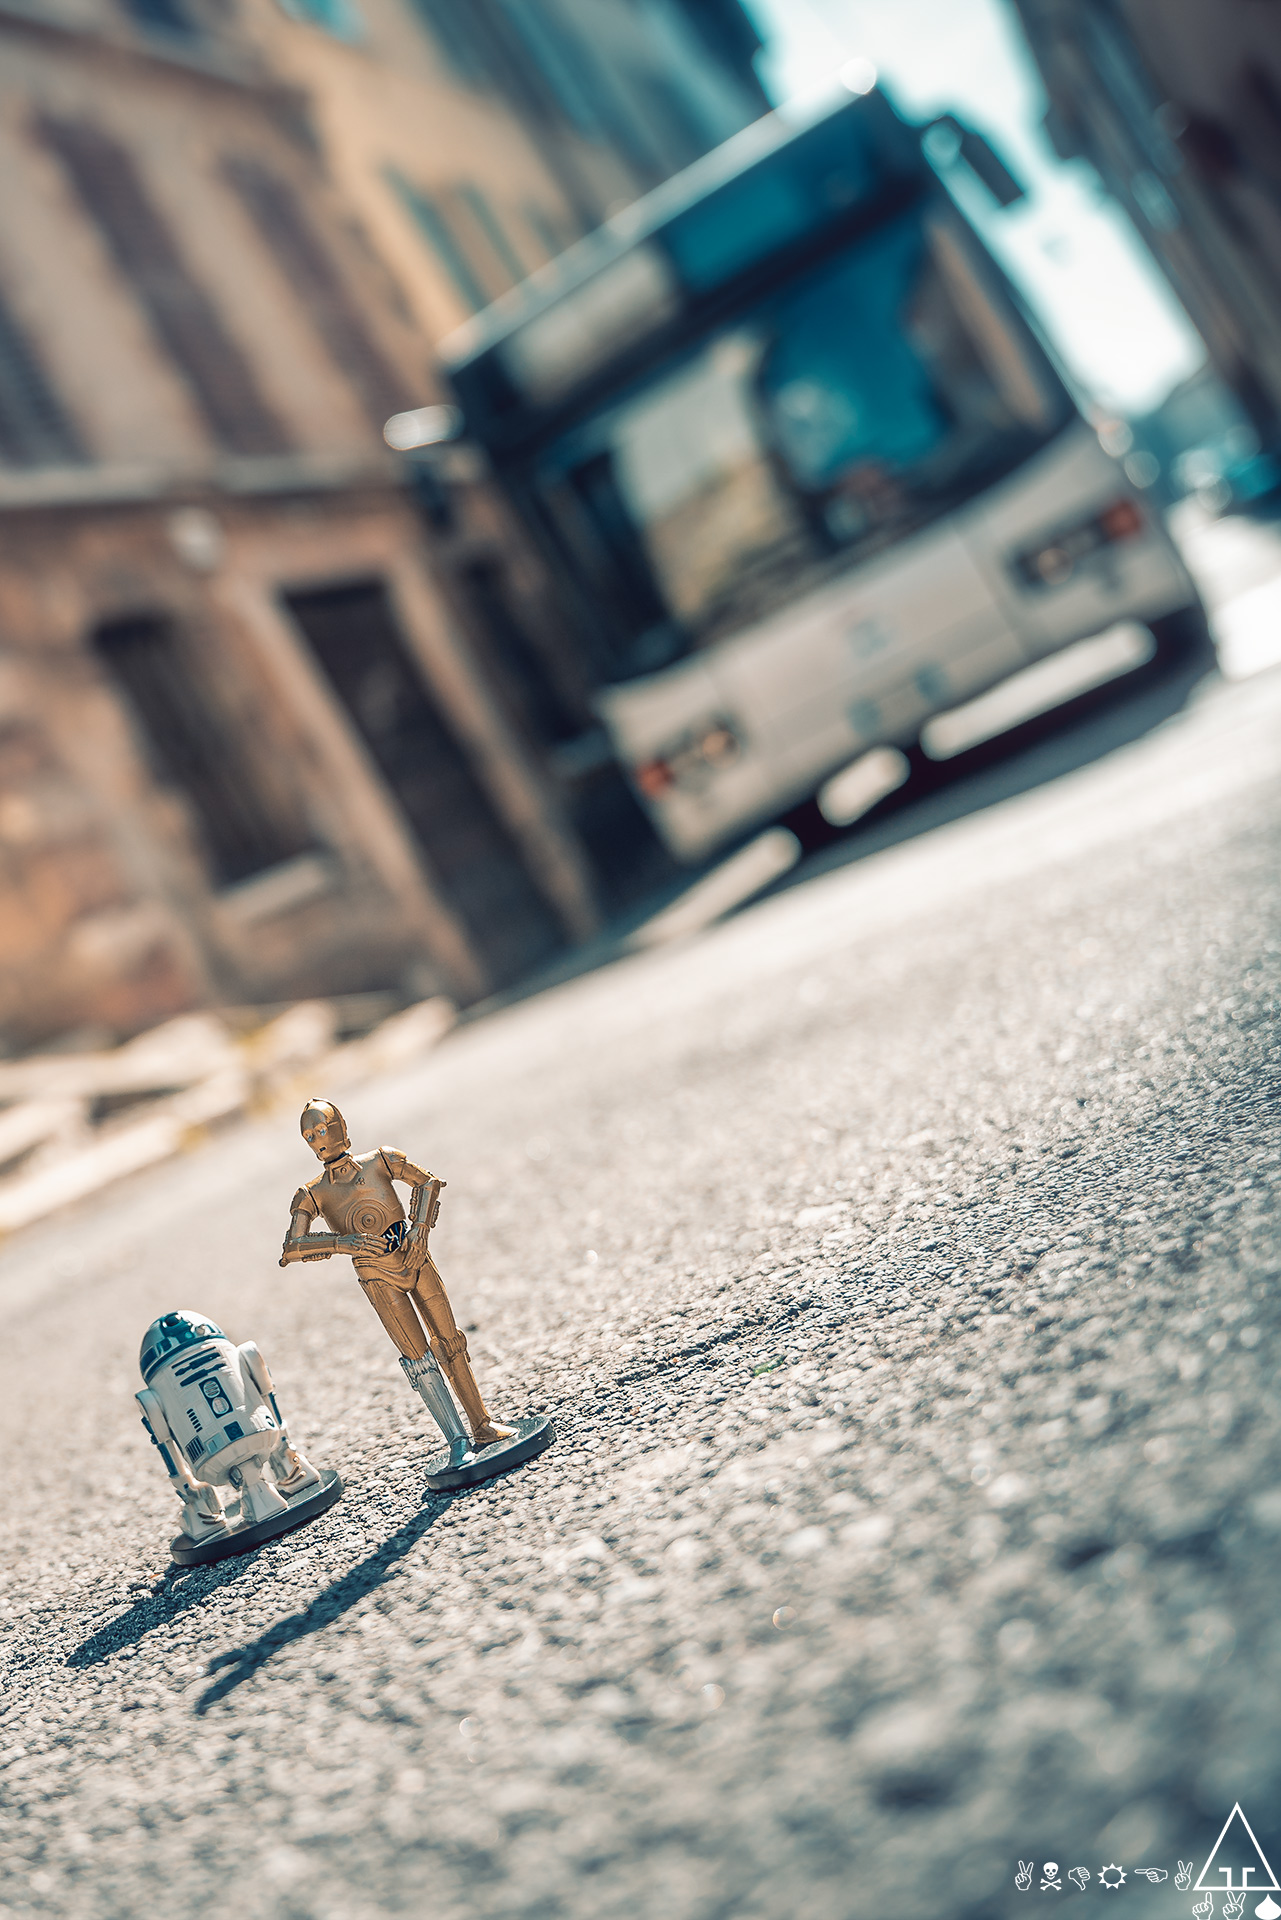 Reckless droids cross the road careless de...